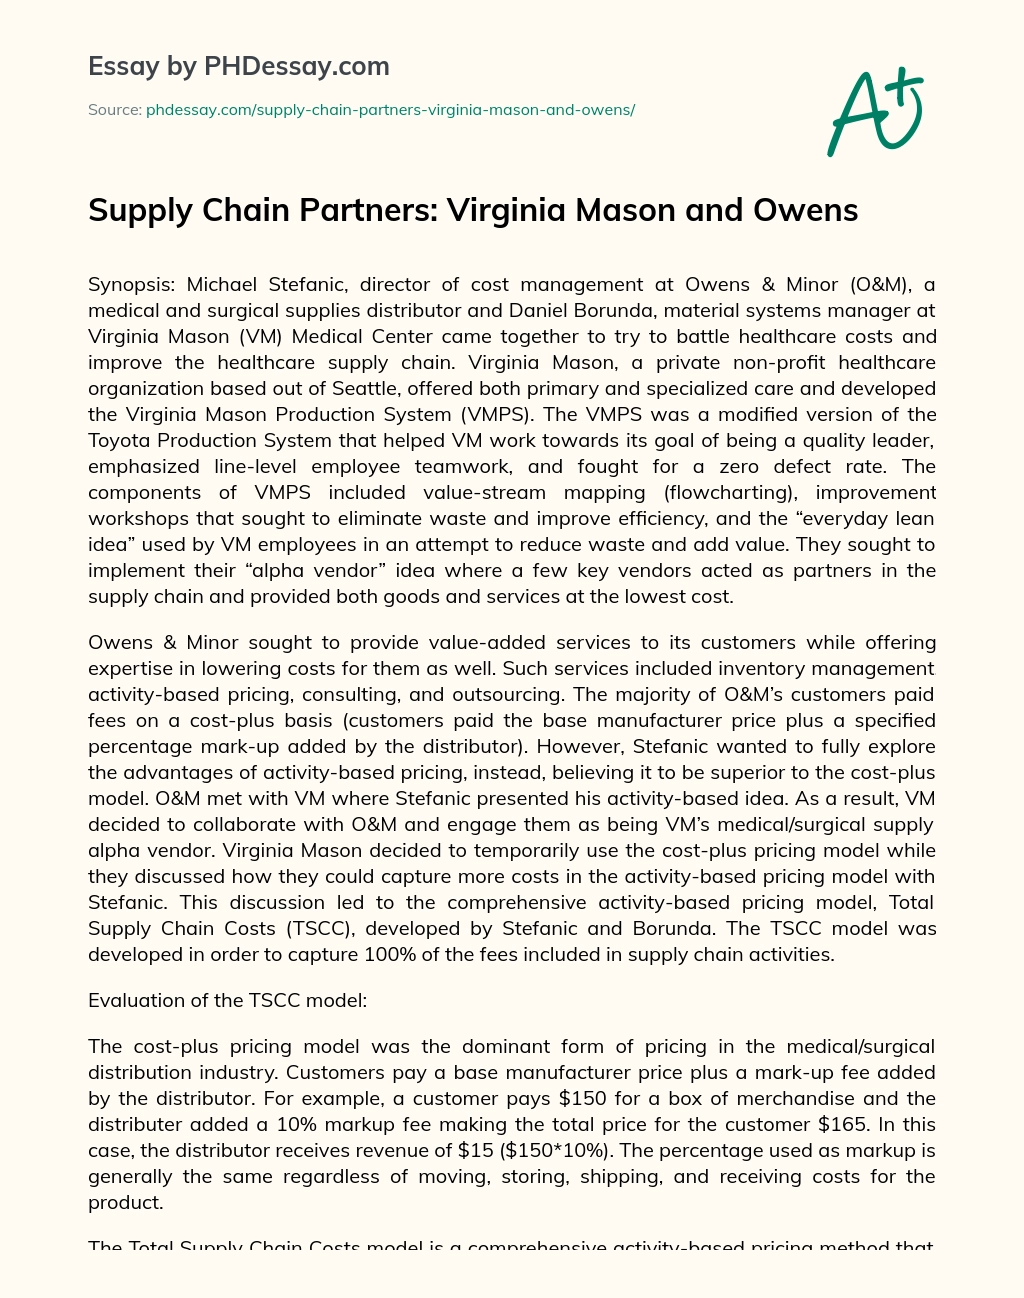 Supply Chain Partners: Virginia Mason and Owens essay